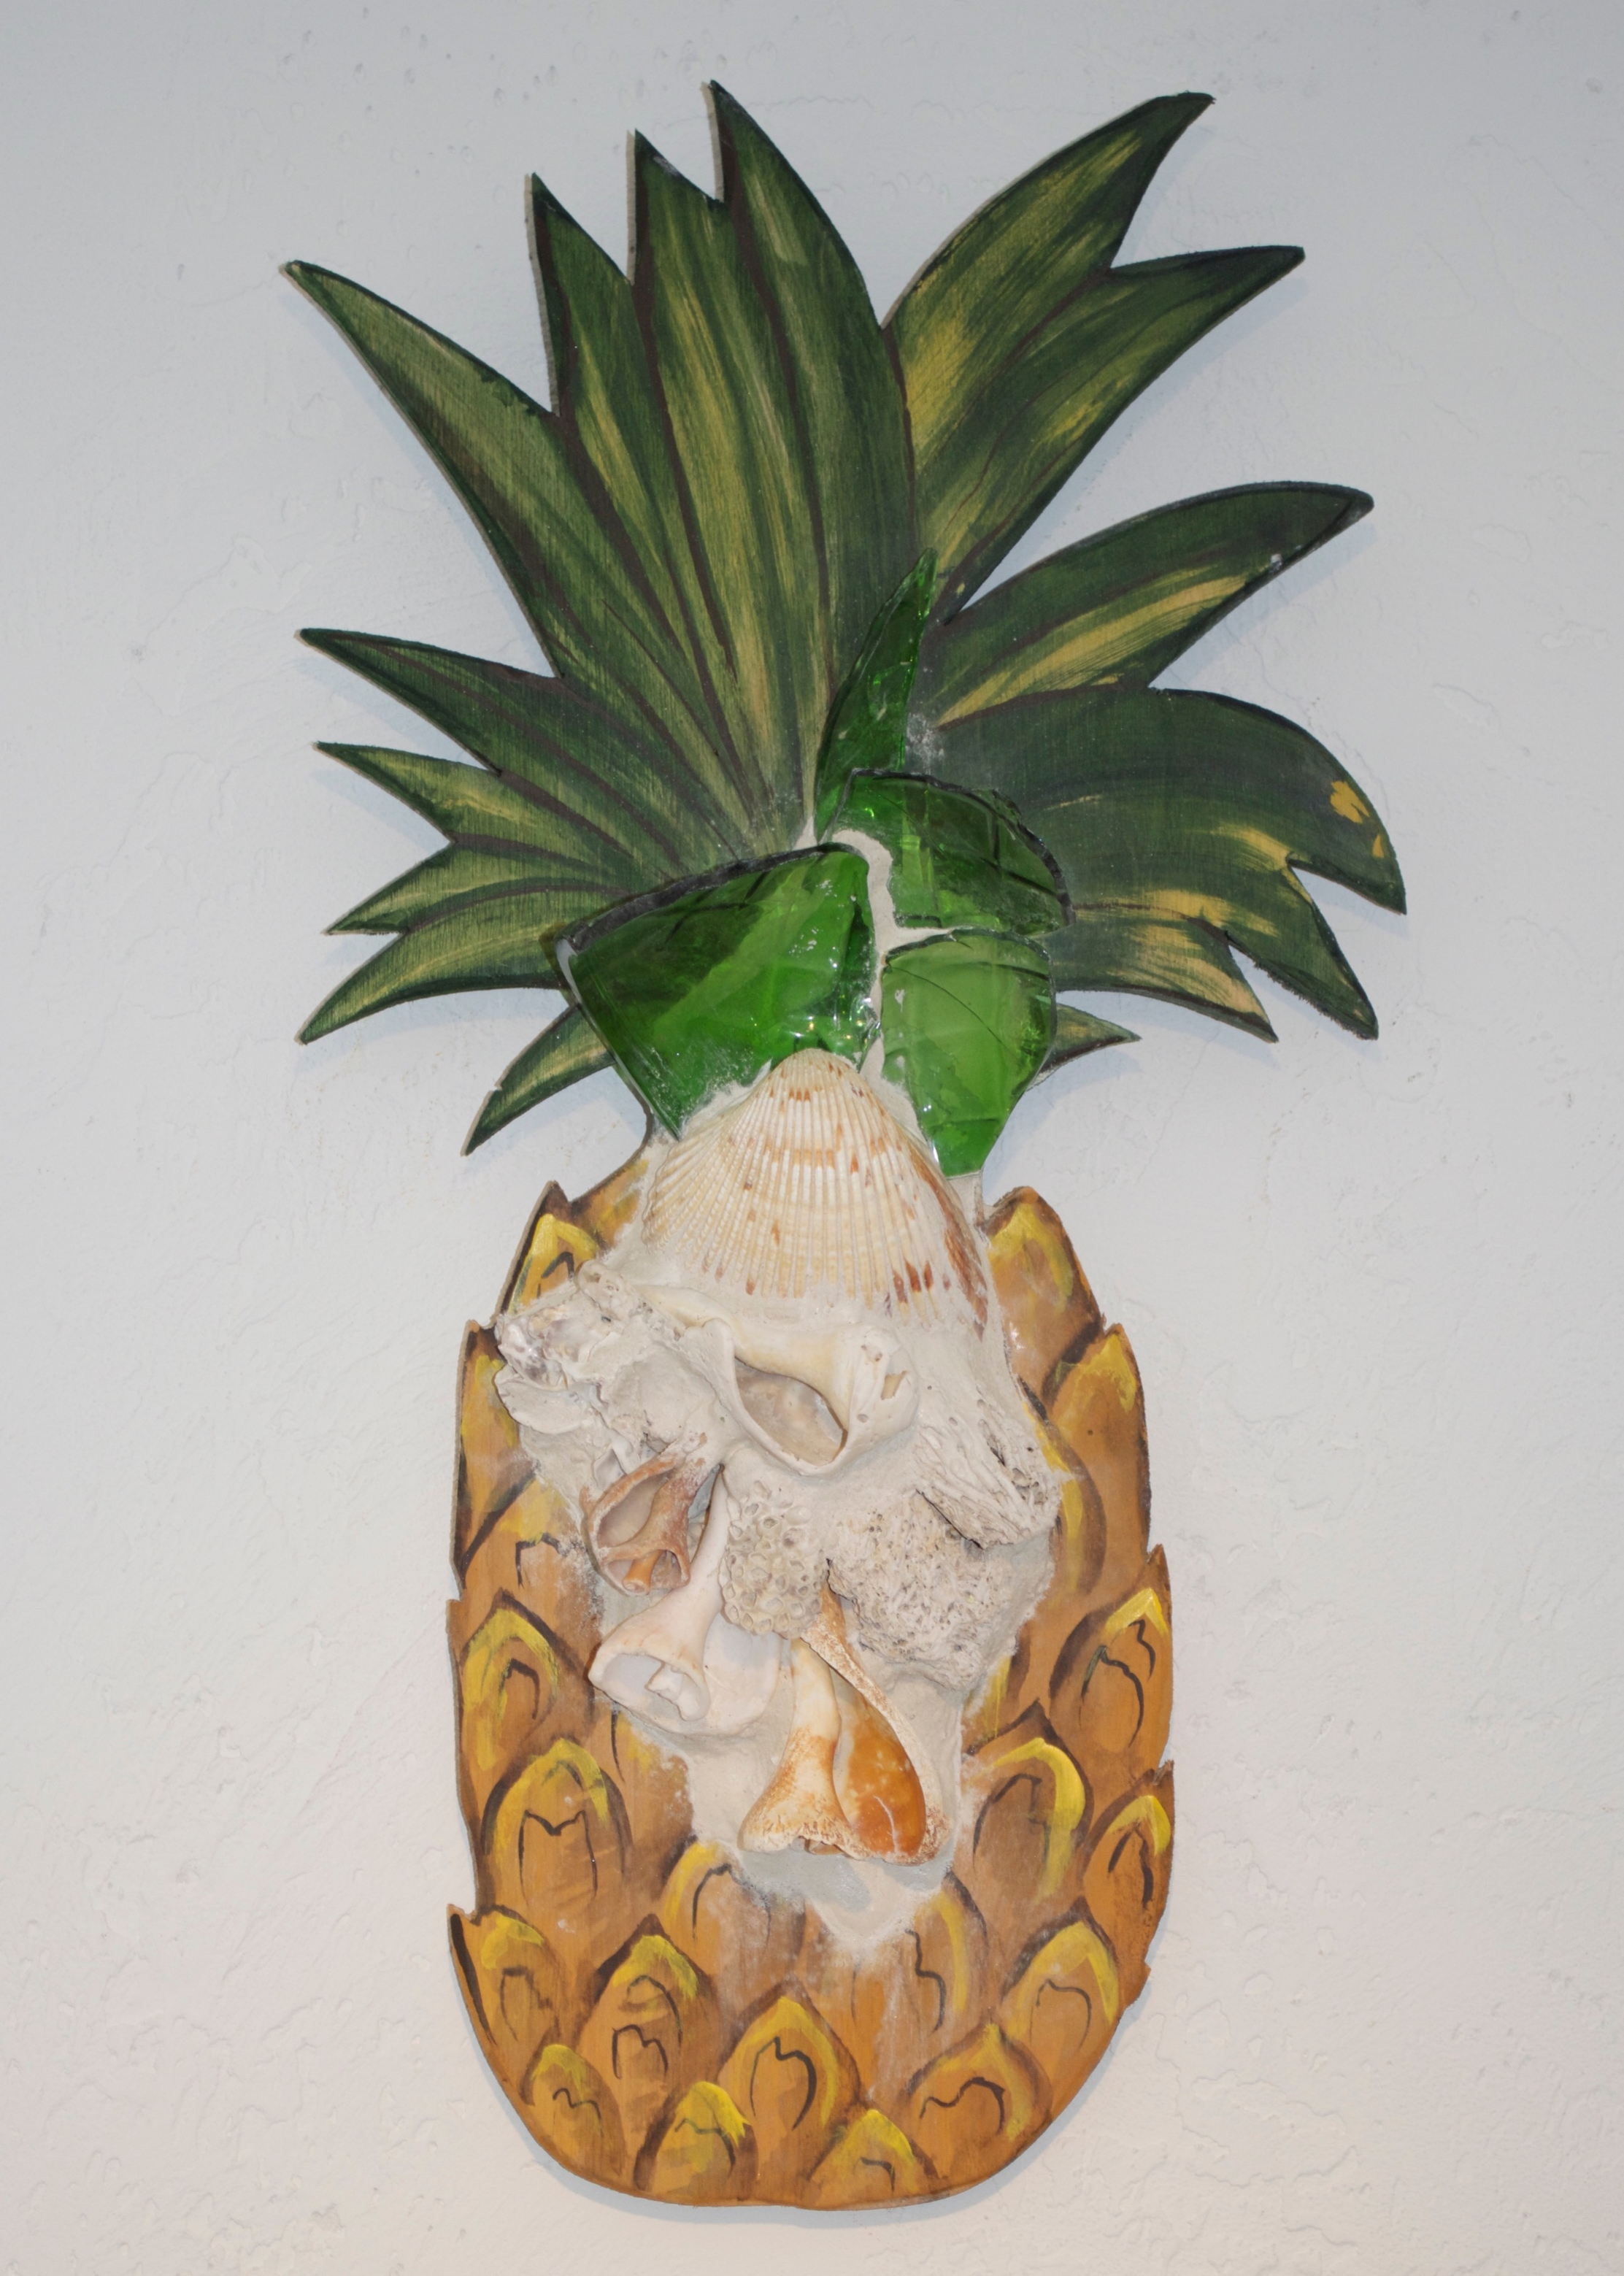 Beach Art - Pineapple - wood, glass, shells - sm. 6" x 11", $44, large 9" x 21", $75